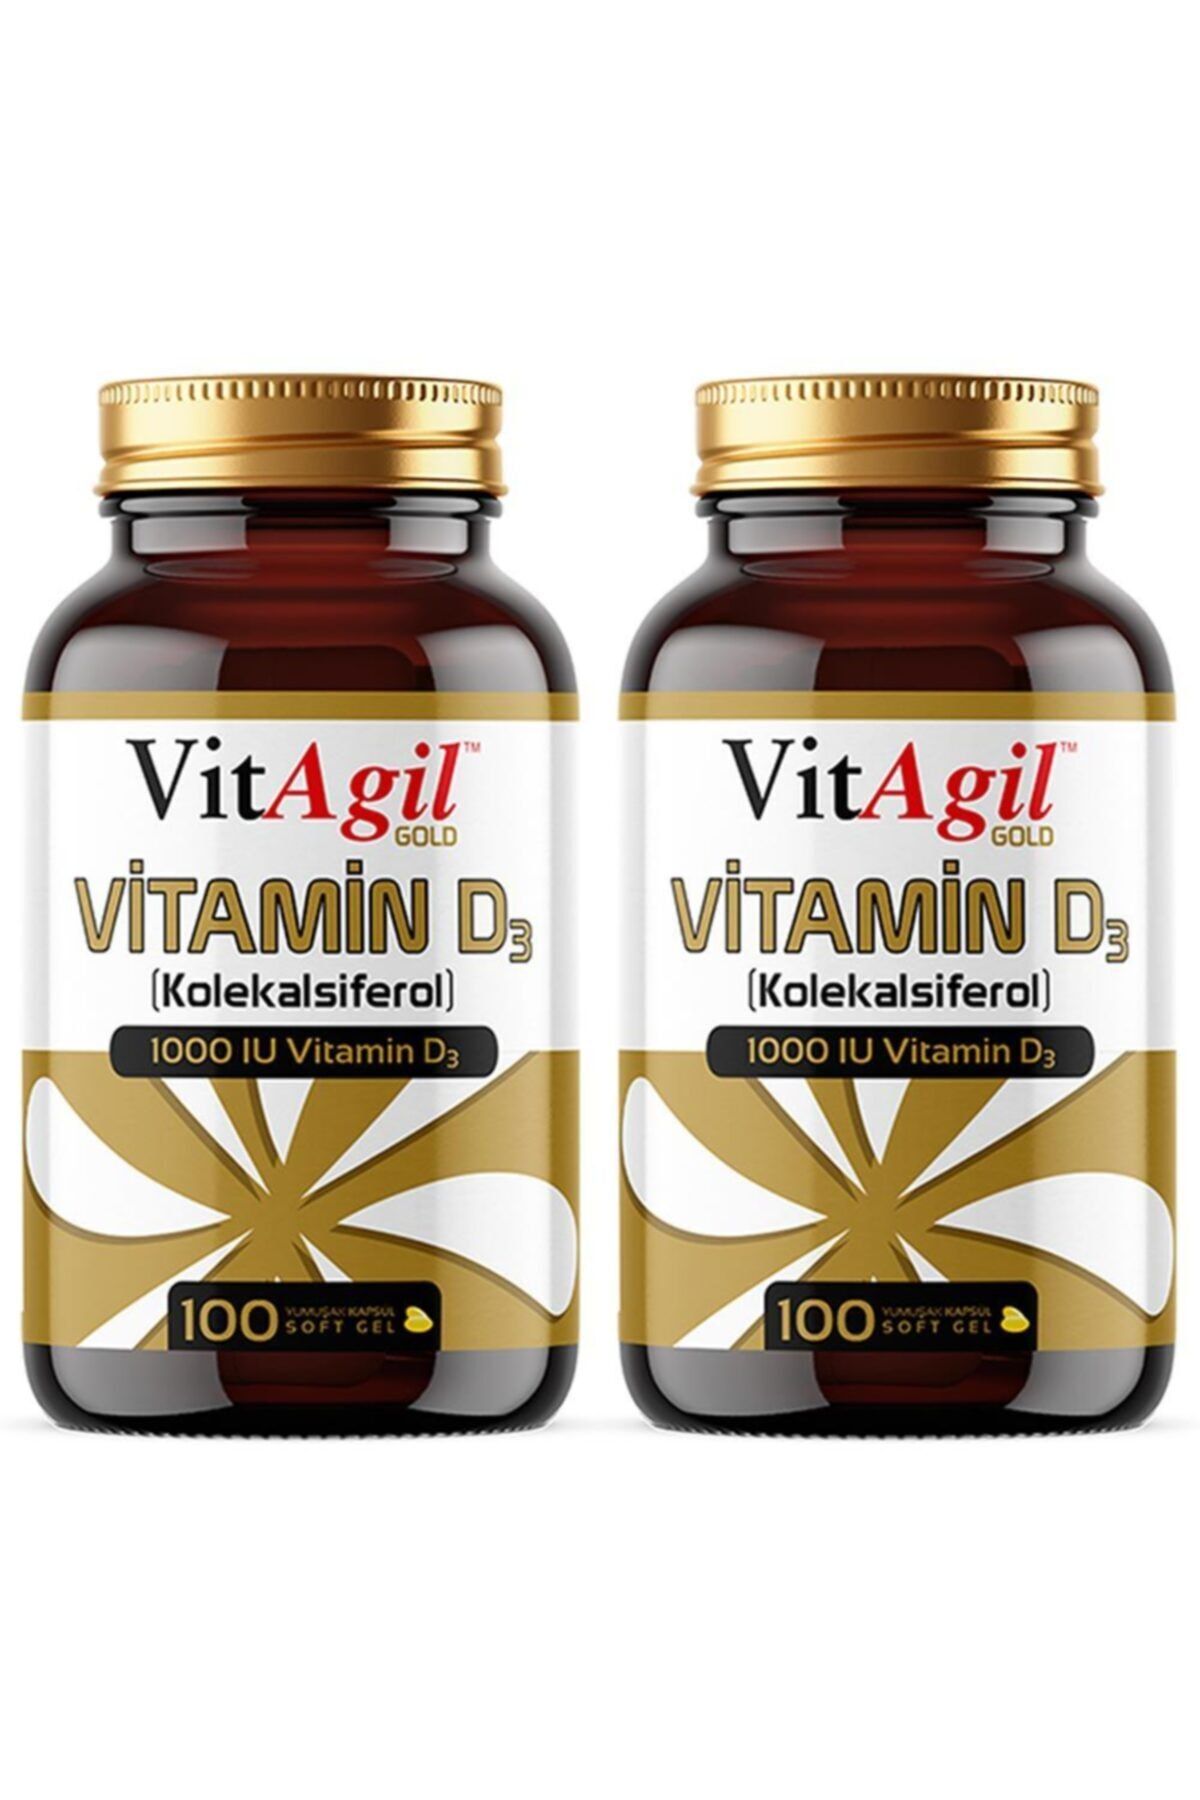 Allergo 2 Adet Vitagil Gold 1000 Iu Vitamin D3 - 100 Soft Gel